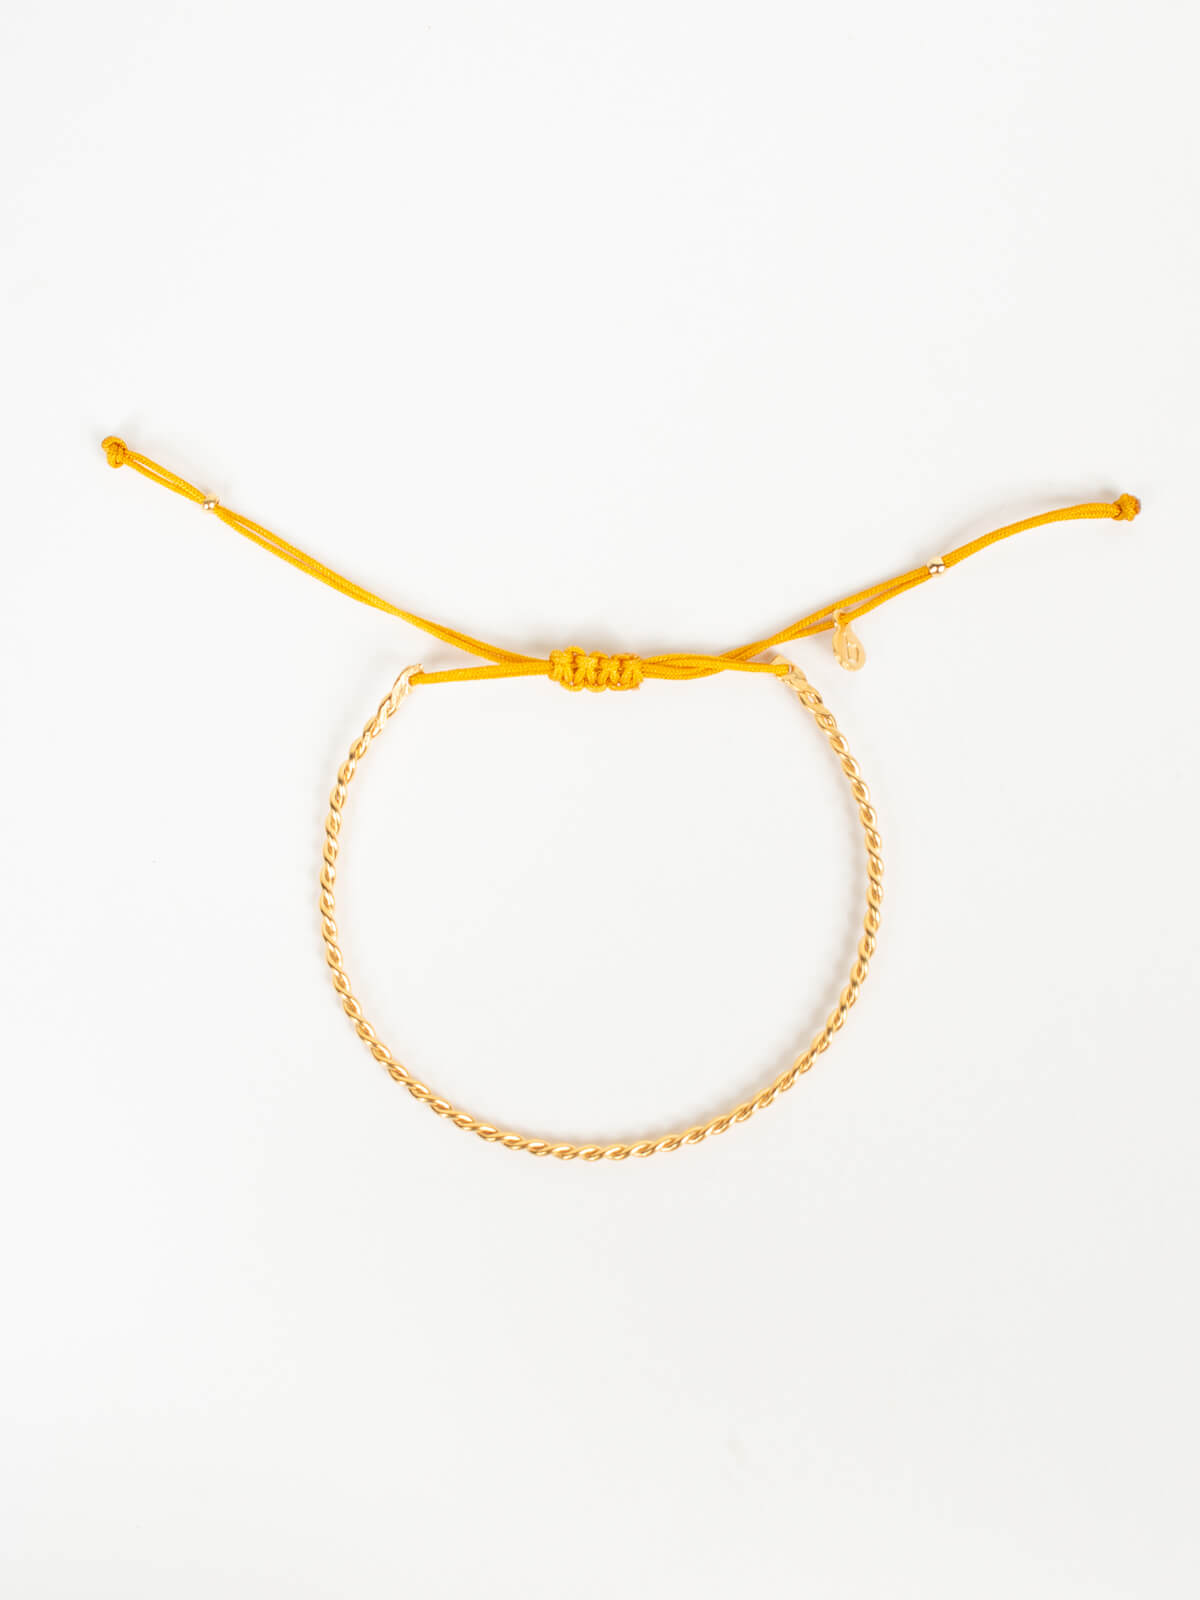 Thin Yellow Cord Bracelet for Men Women Teen Unisex Adult - Waterproof Nylon Surfer String Friendship Bracelets Summer Beach Accessories